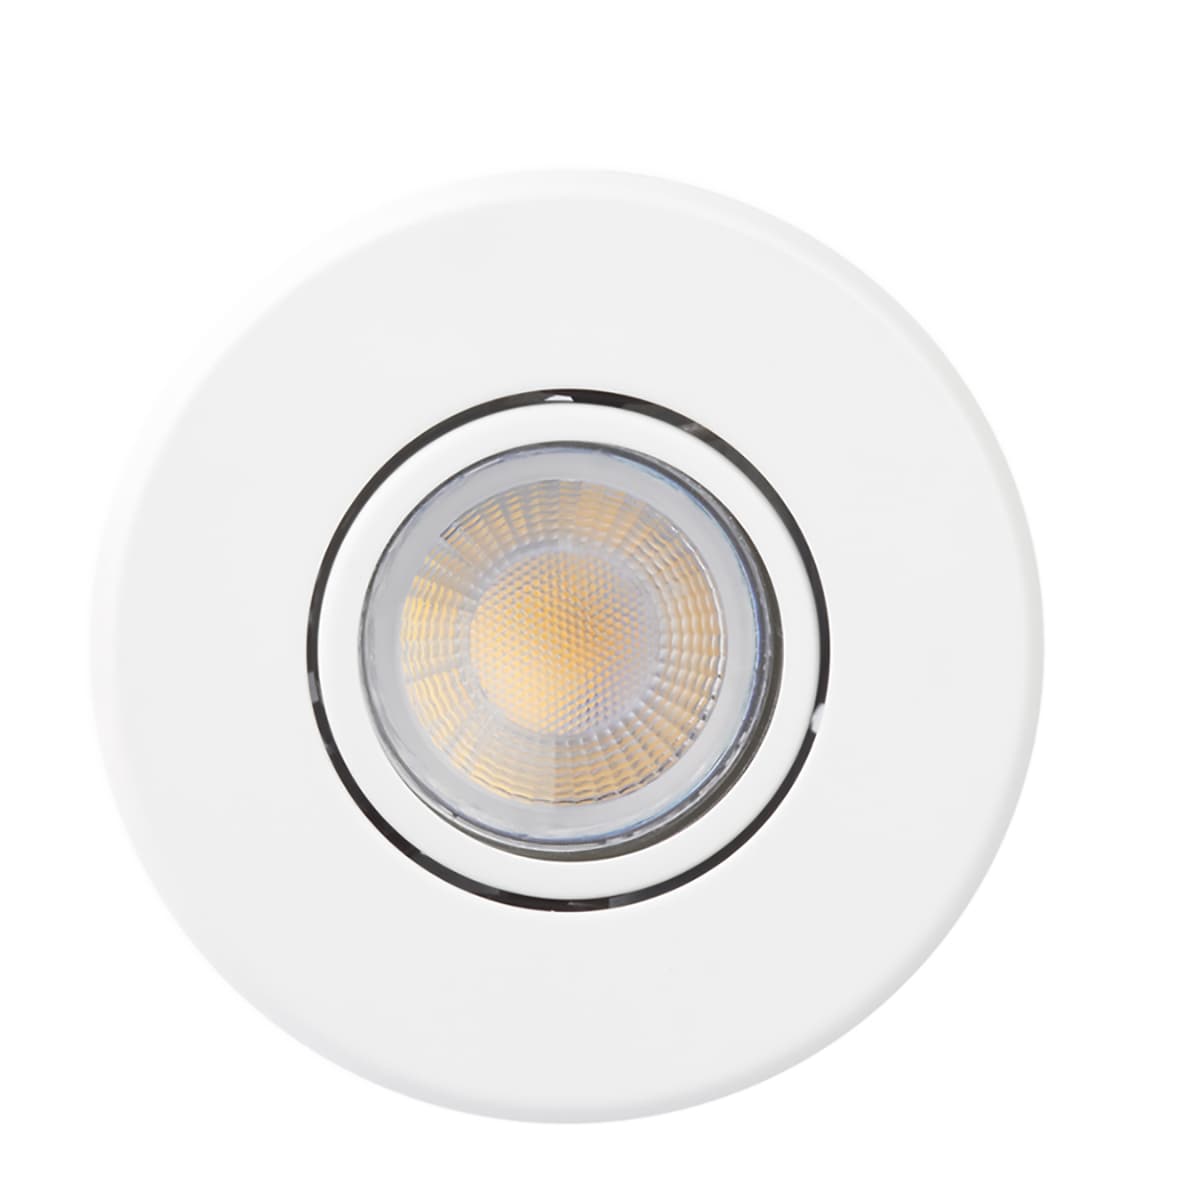 Sets LED Recessed-spotlight Recessed spot Ceiling Kanto gu10 Recessed Light Square 230v 